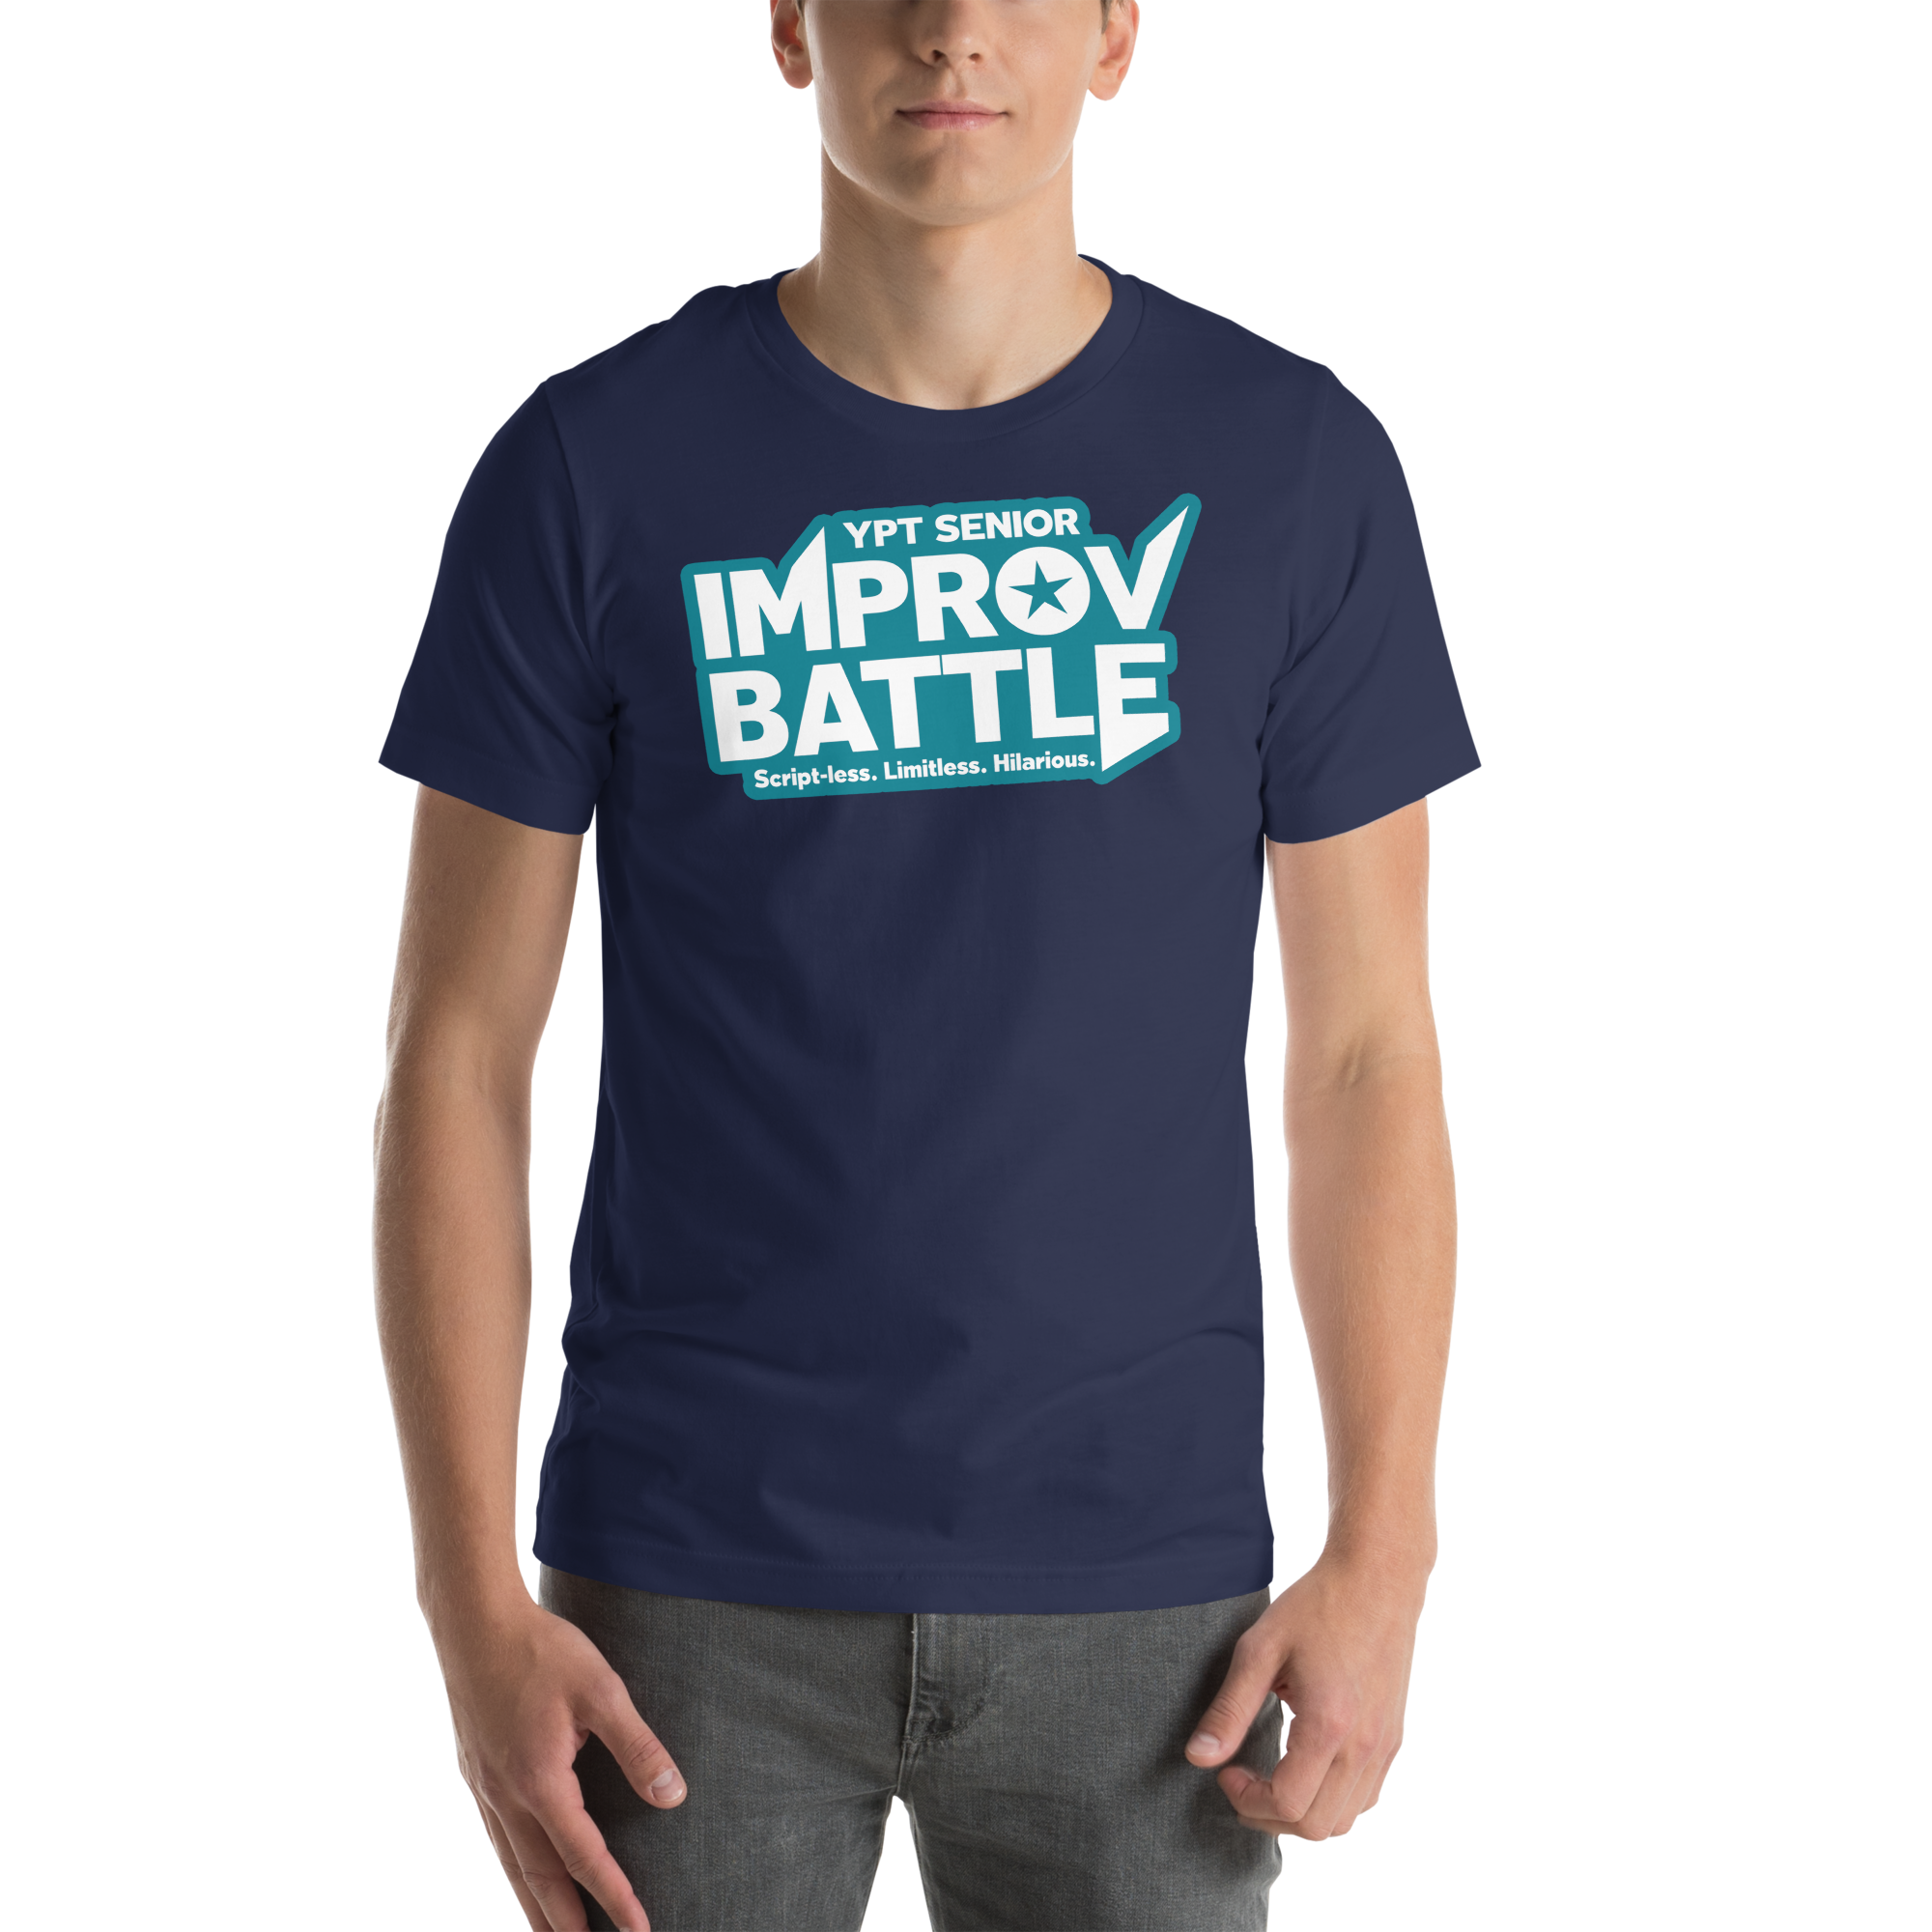 Improv Battle - Adult Unisex t-shirt